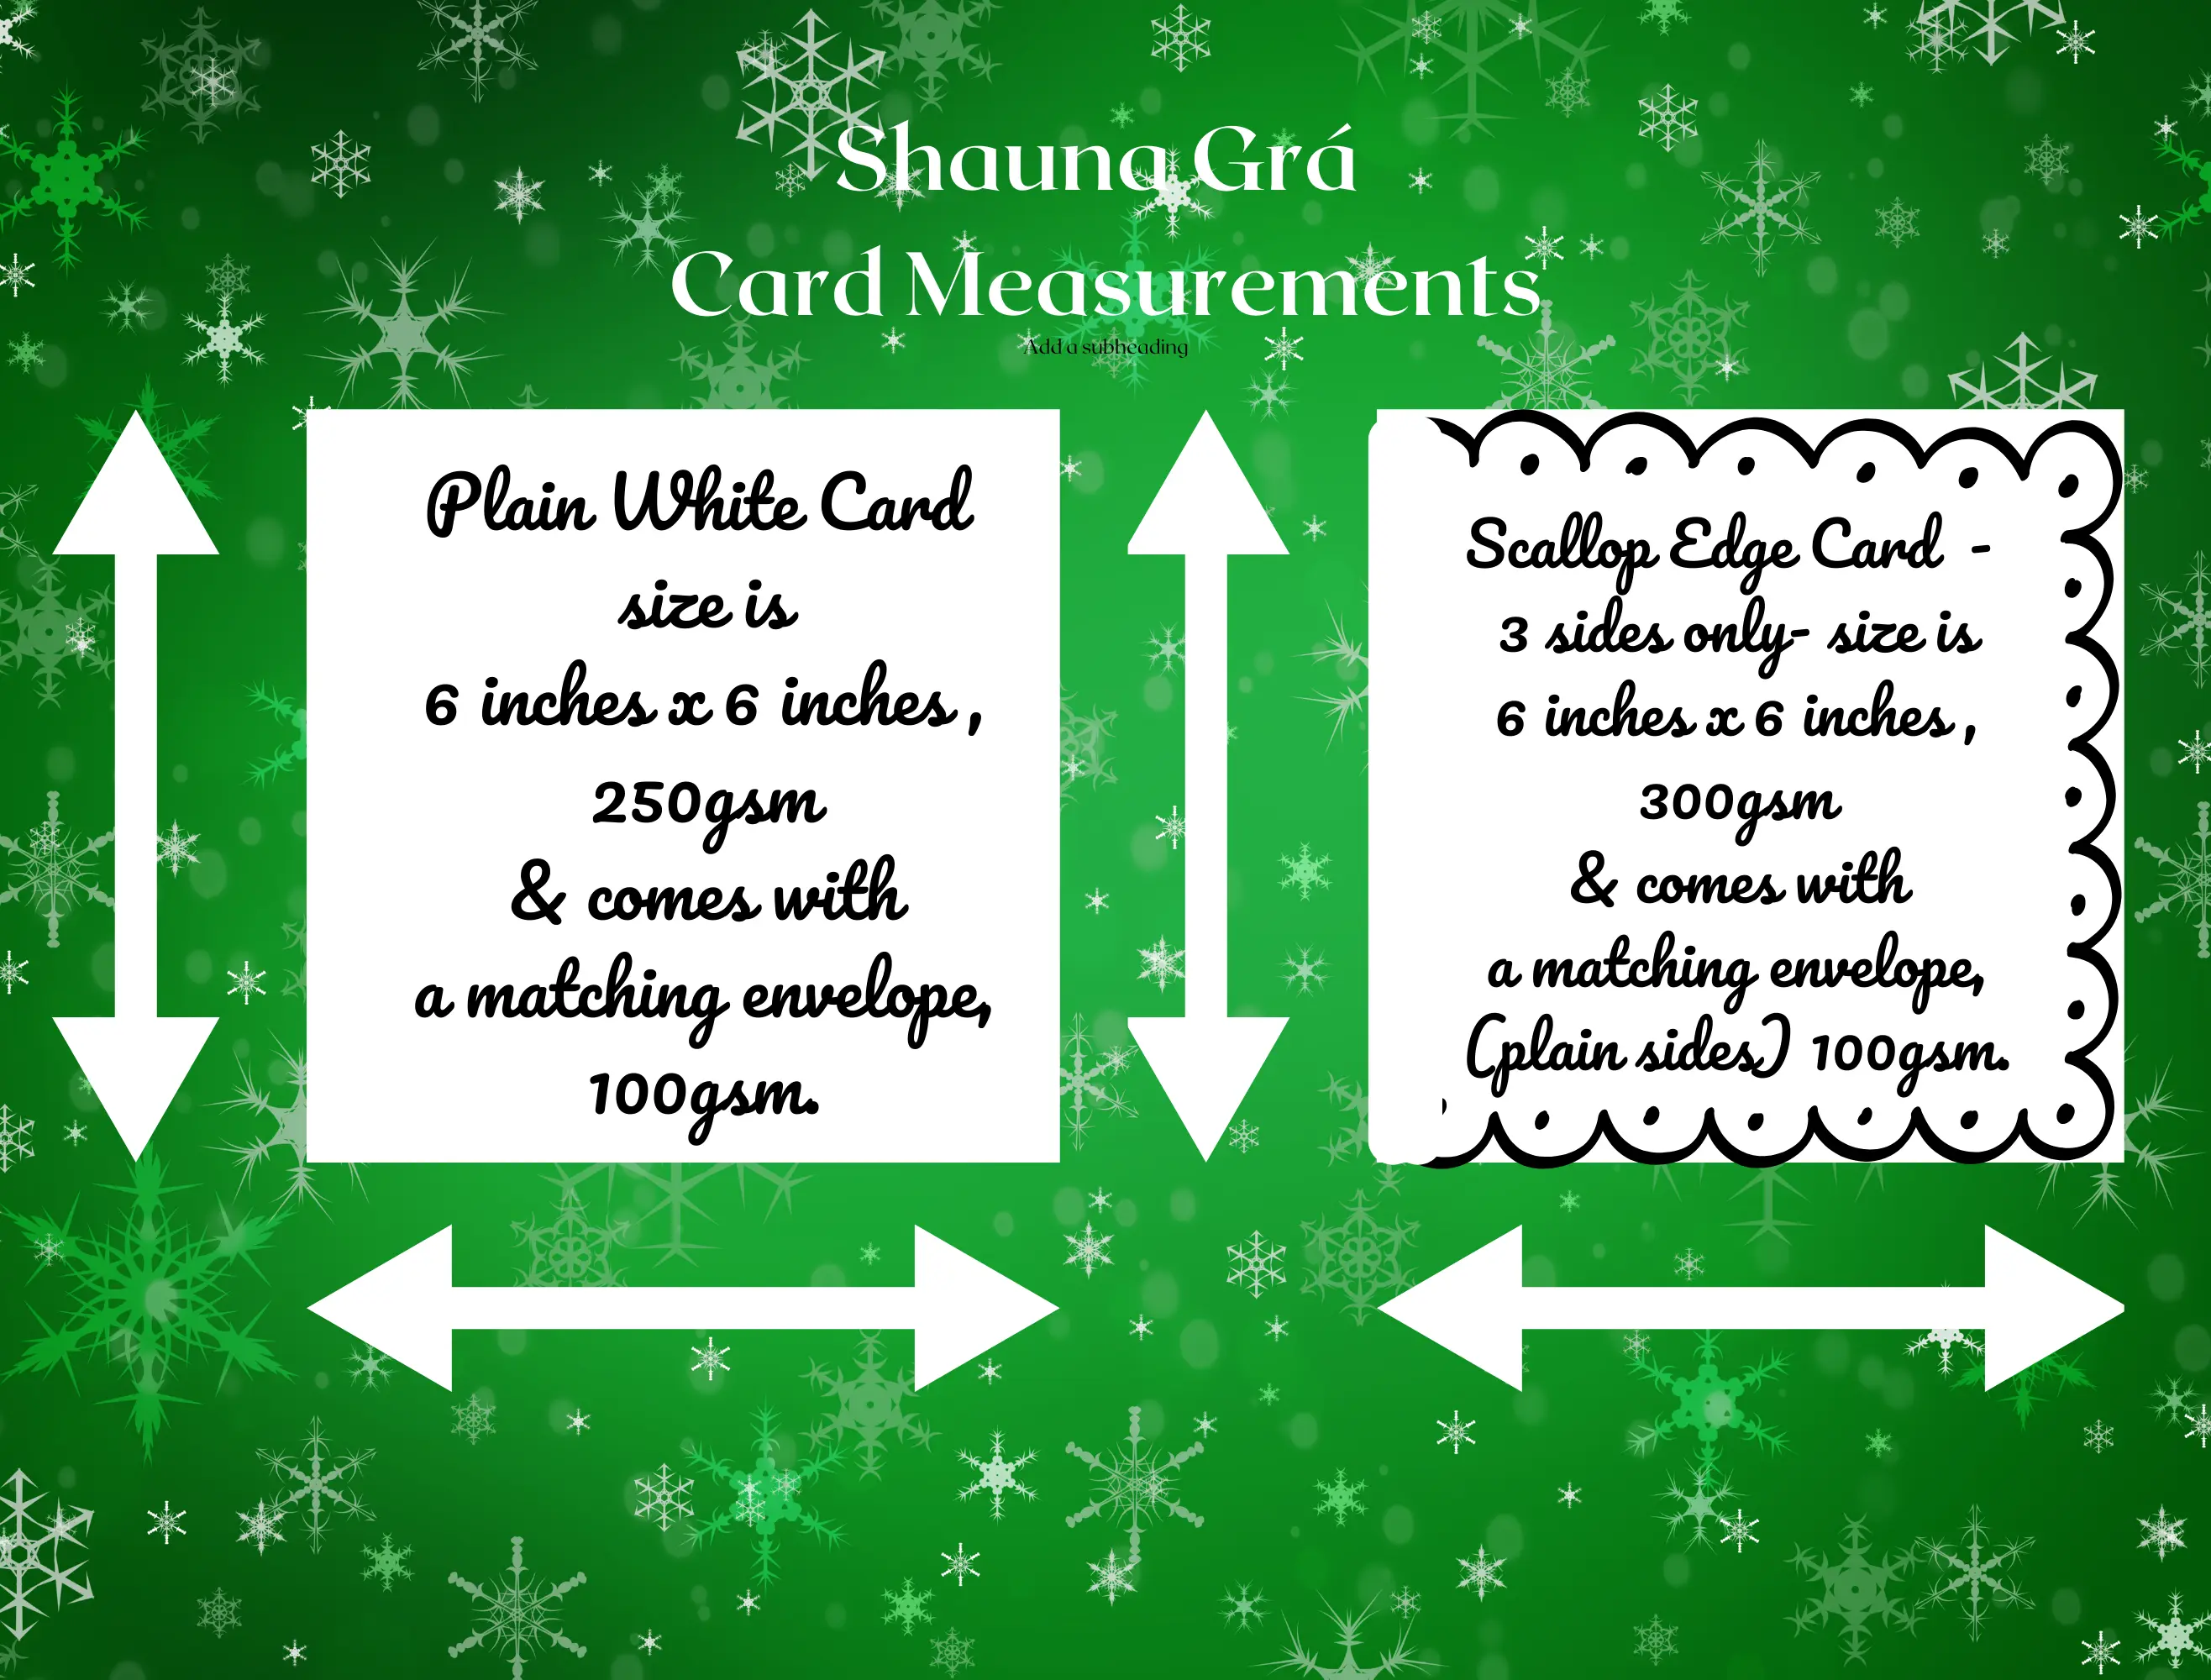 Irish language christmas cards pack of 5 nollaig shona duit